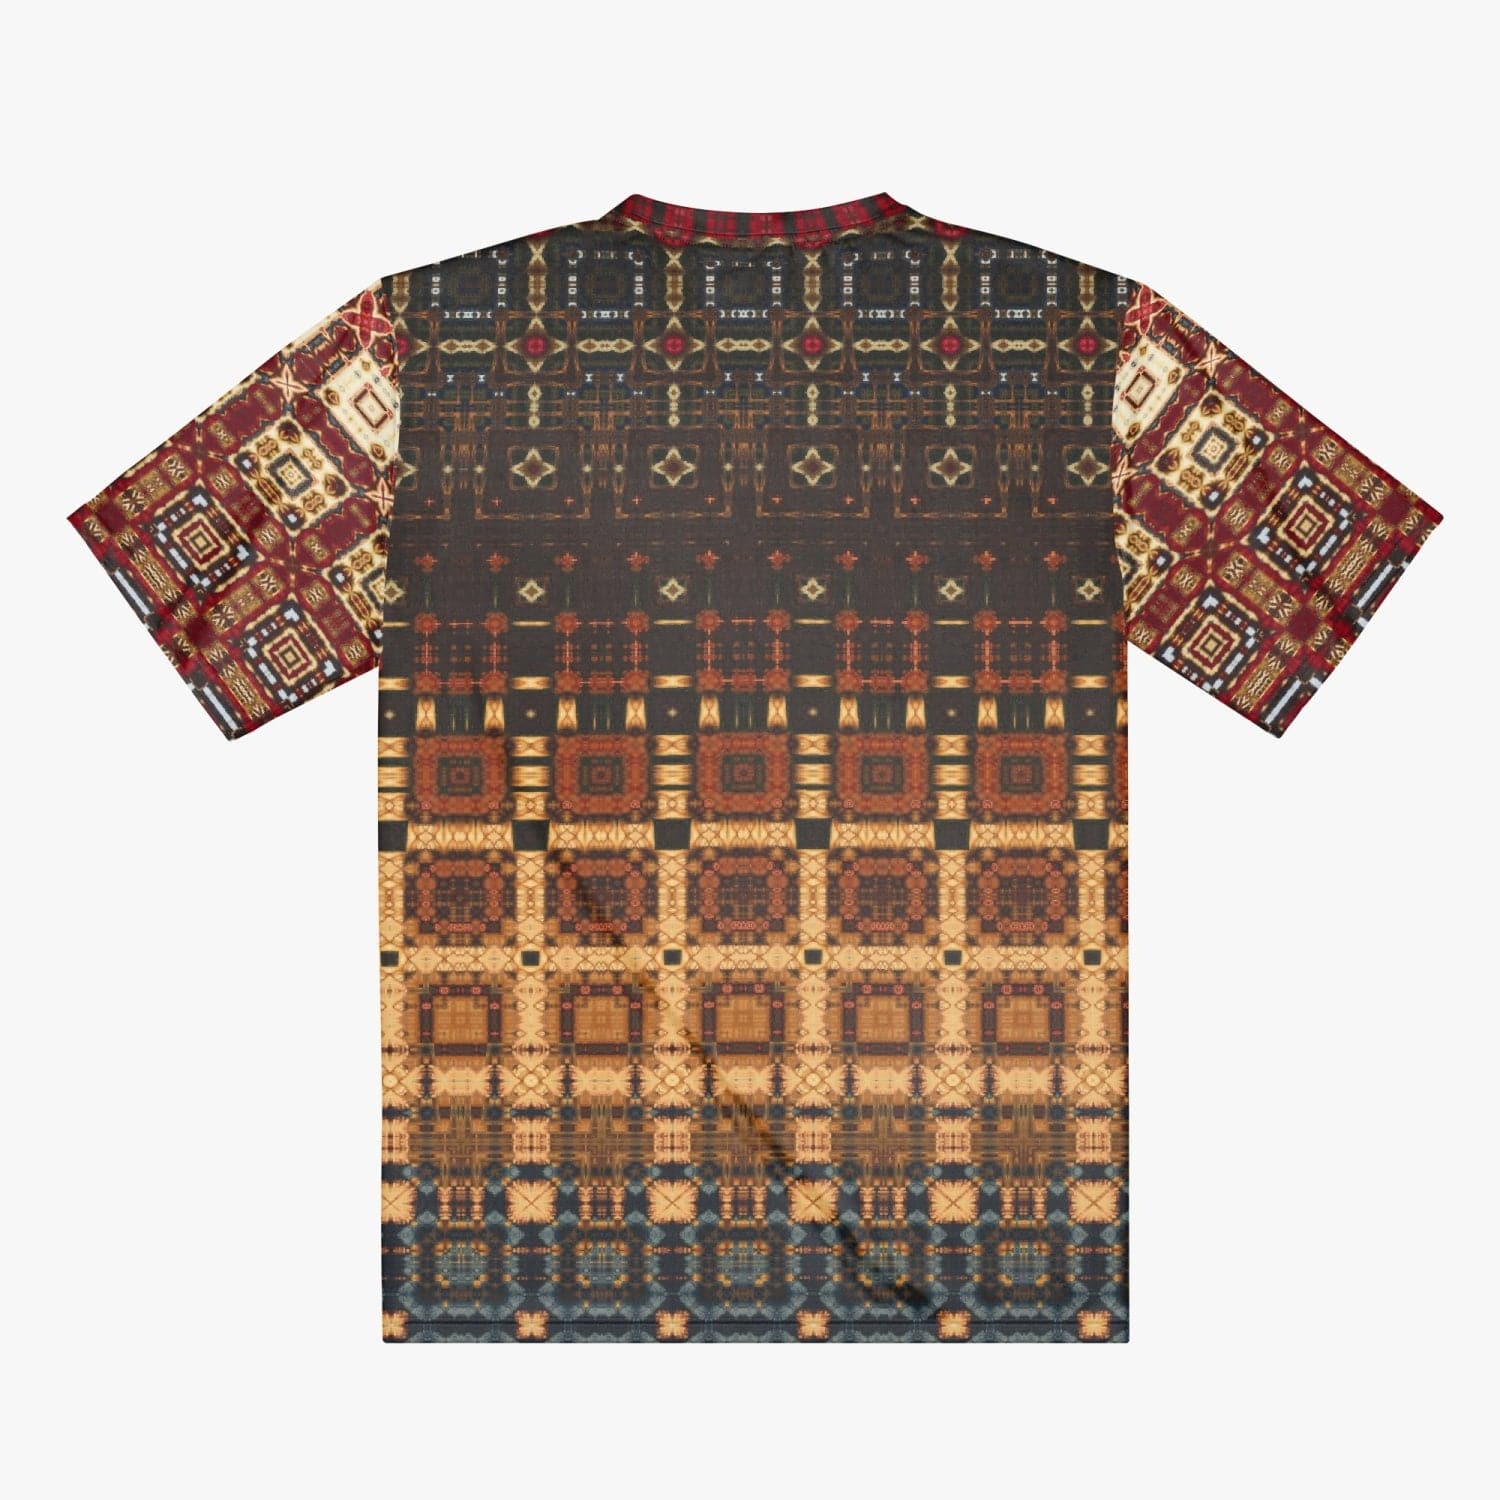 Orange and Brown Patterned Handmade T-shirt for Men by Sensus Studio Design